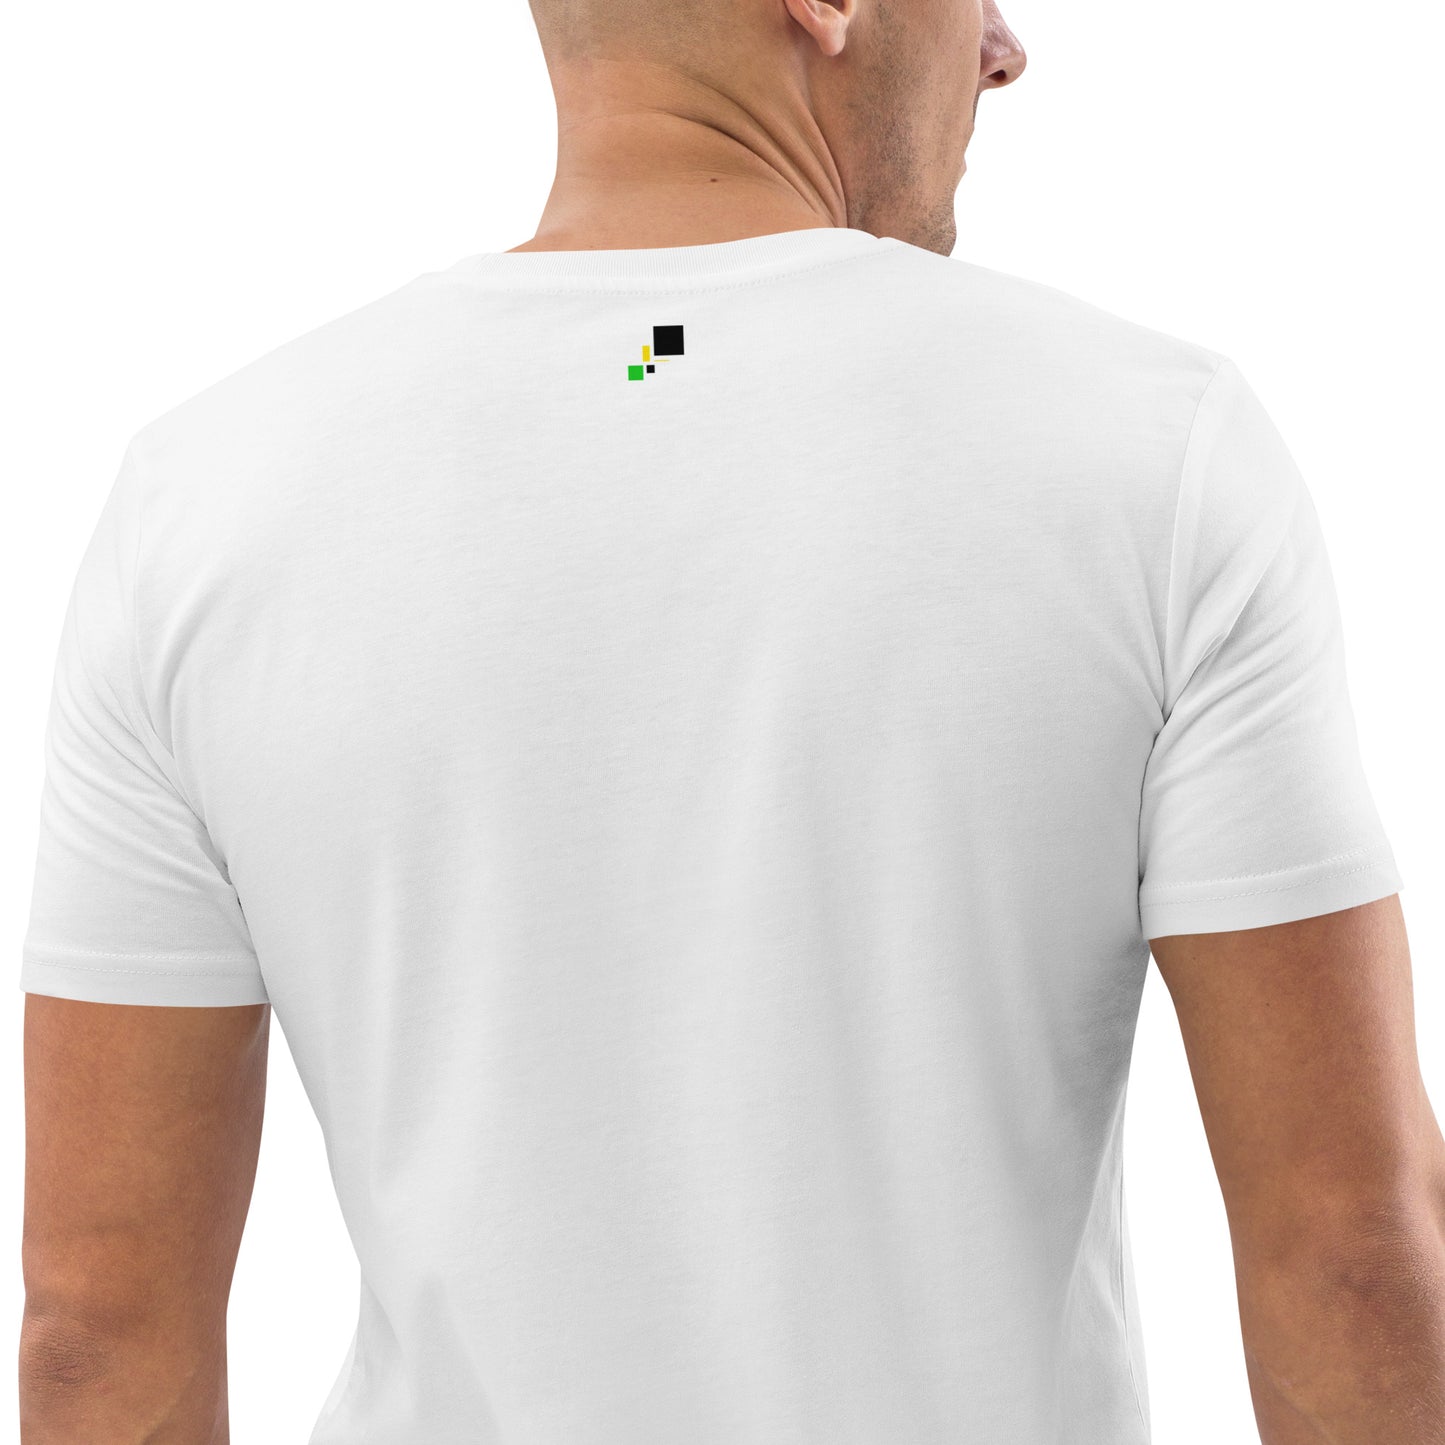 Be First Impact - Camiseta de algodón orgánico unisex